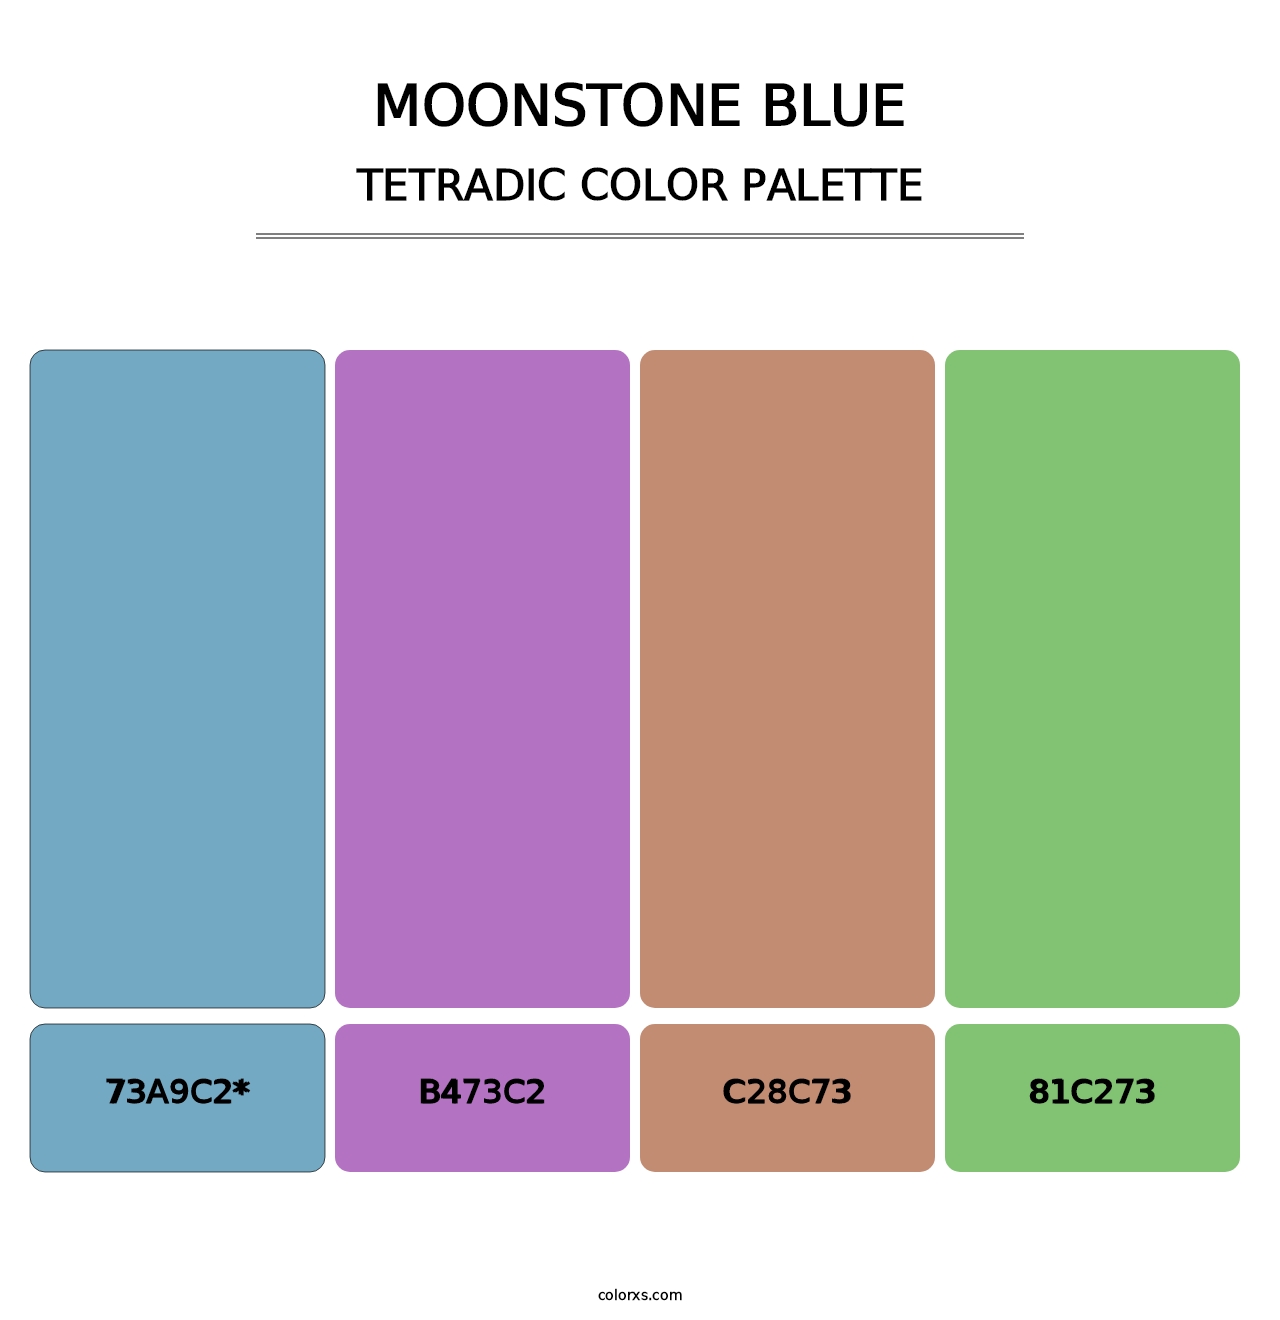 Moonstone Blue - Tetradic Color Palette